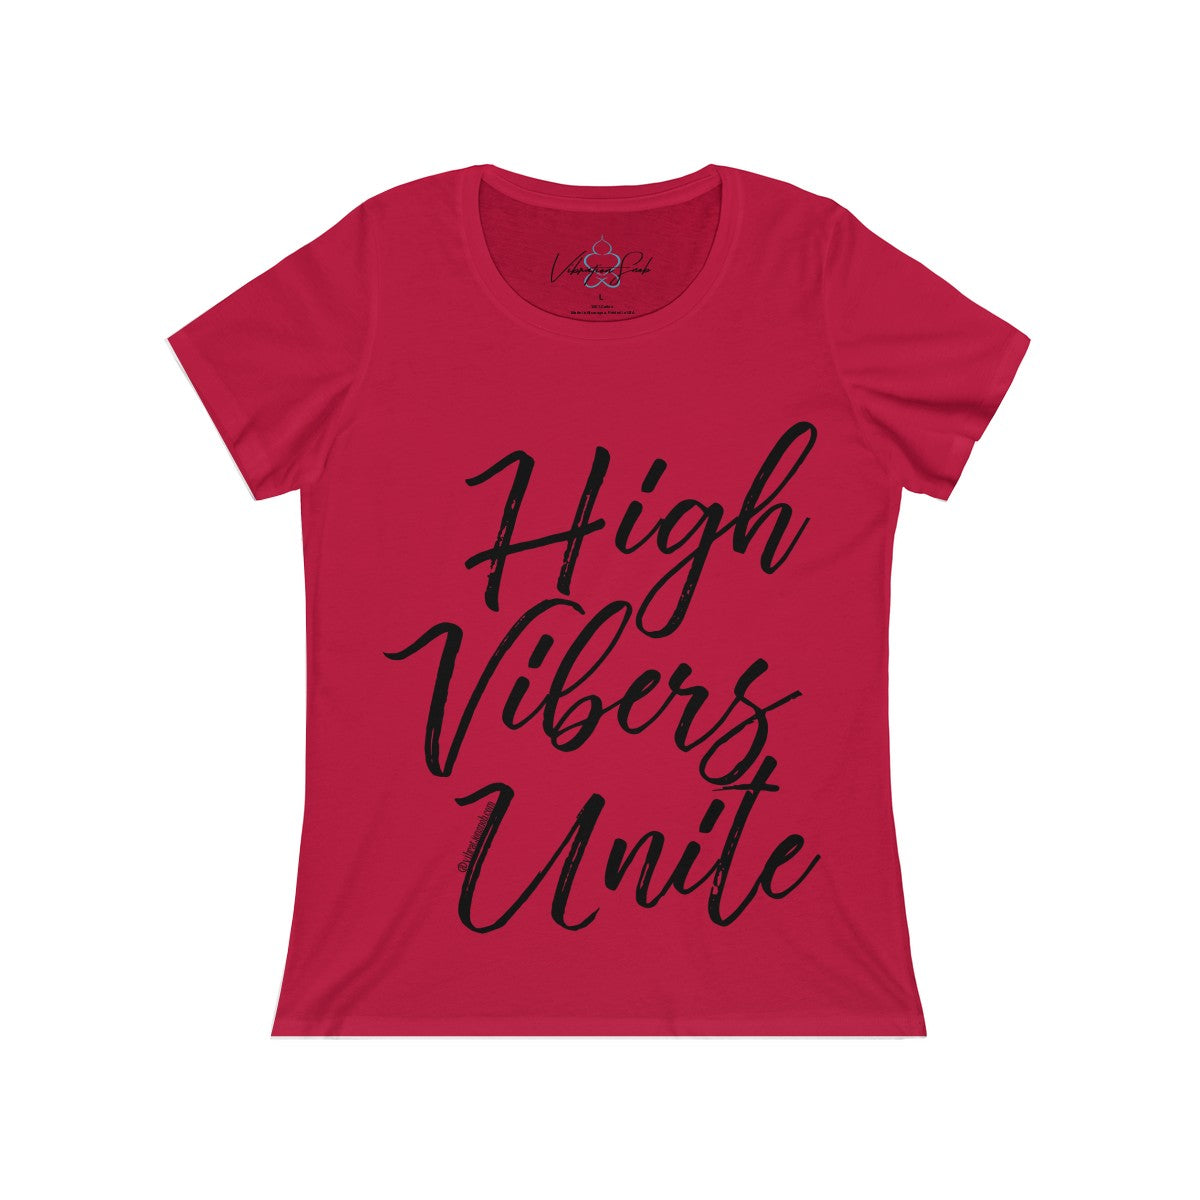 High Vibers Unite - Women's Relaxed Jersey Short Sleeve Scoop Neck Tee